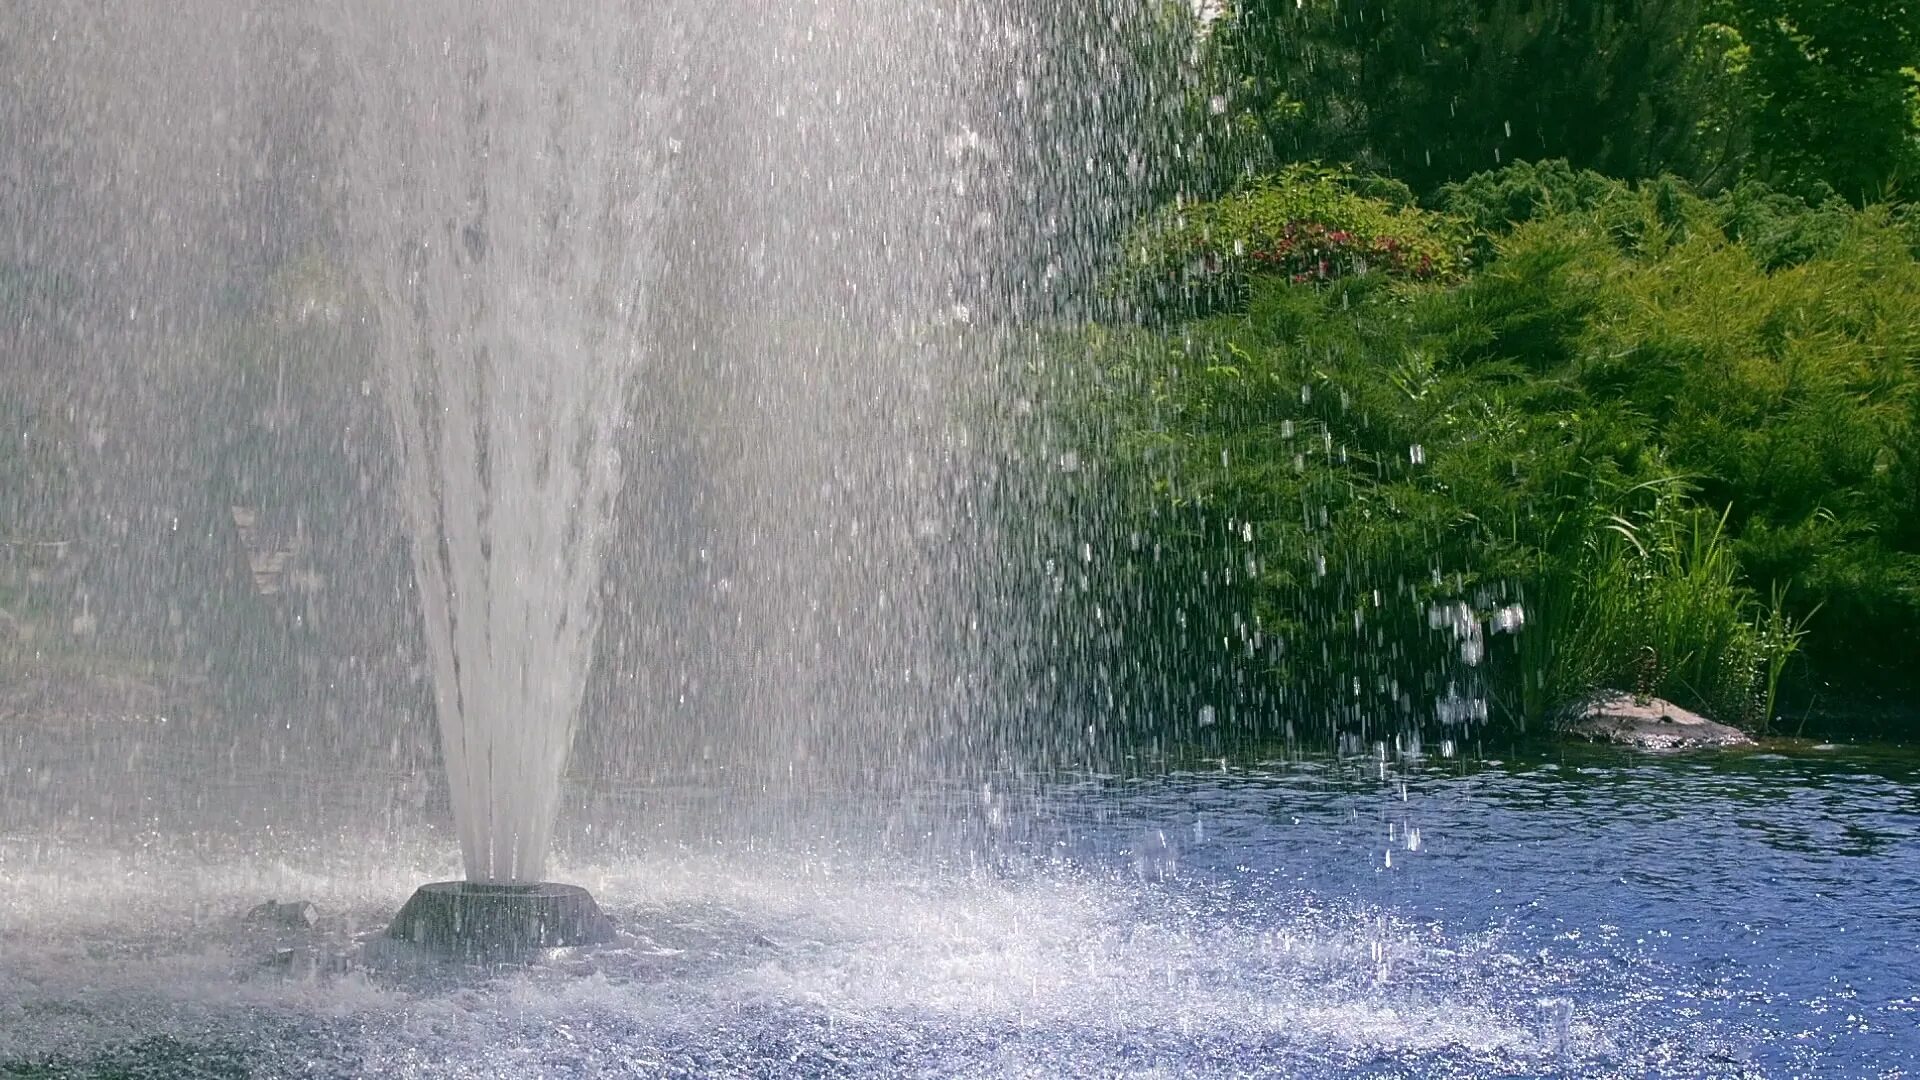 Water fountain перевод на русский. Грин парк фонтан. Фонтан воды PNG. Fountain Waterfall Splash texture. Water Splashes Motion Graphics. Fountain.